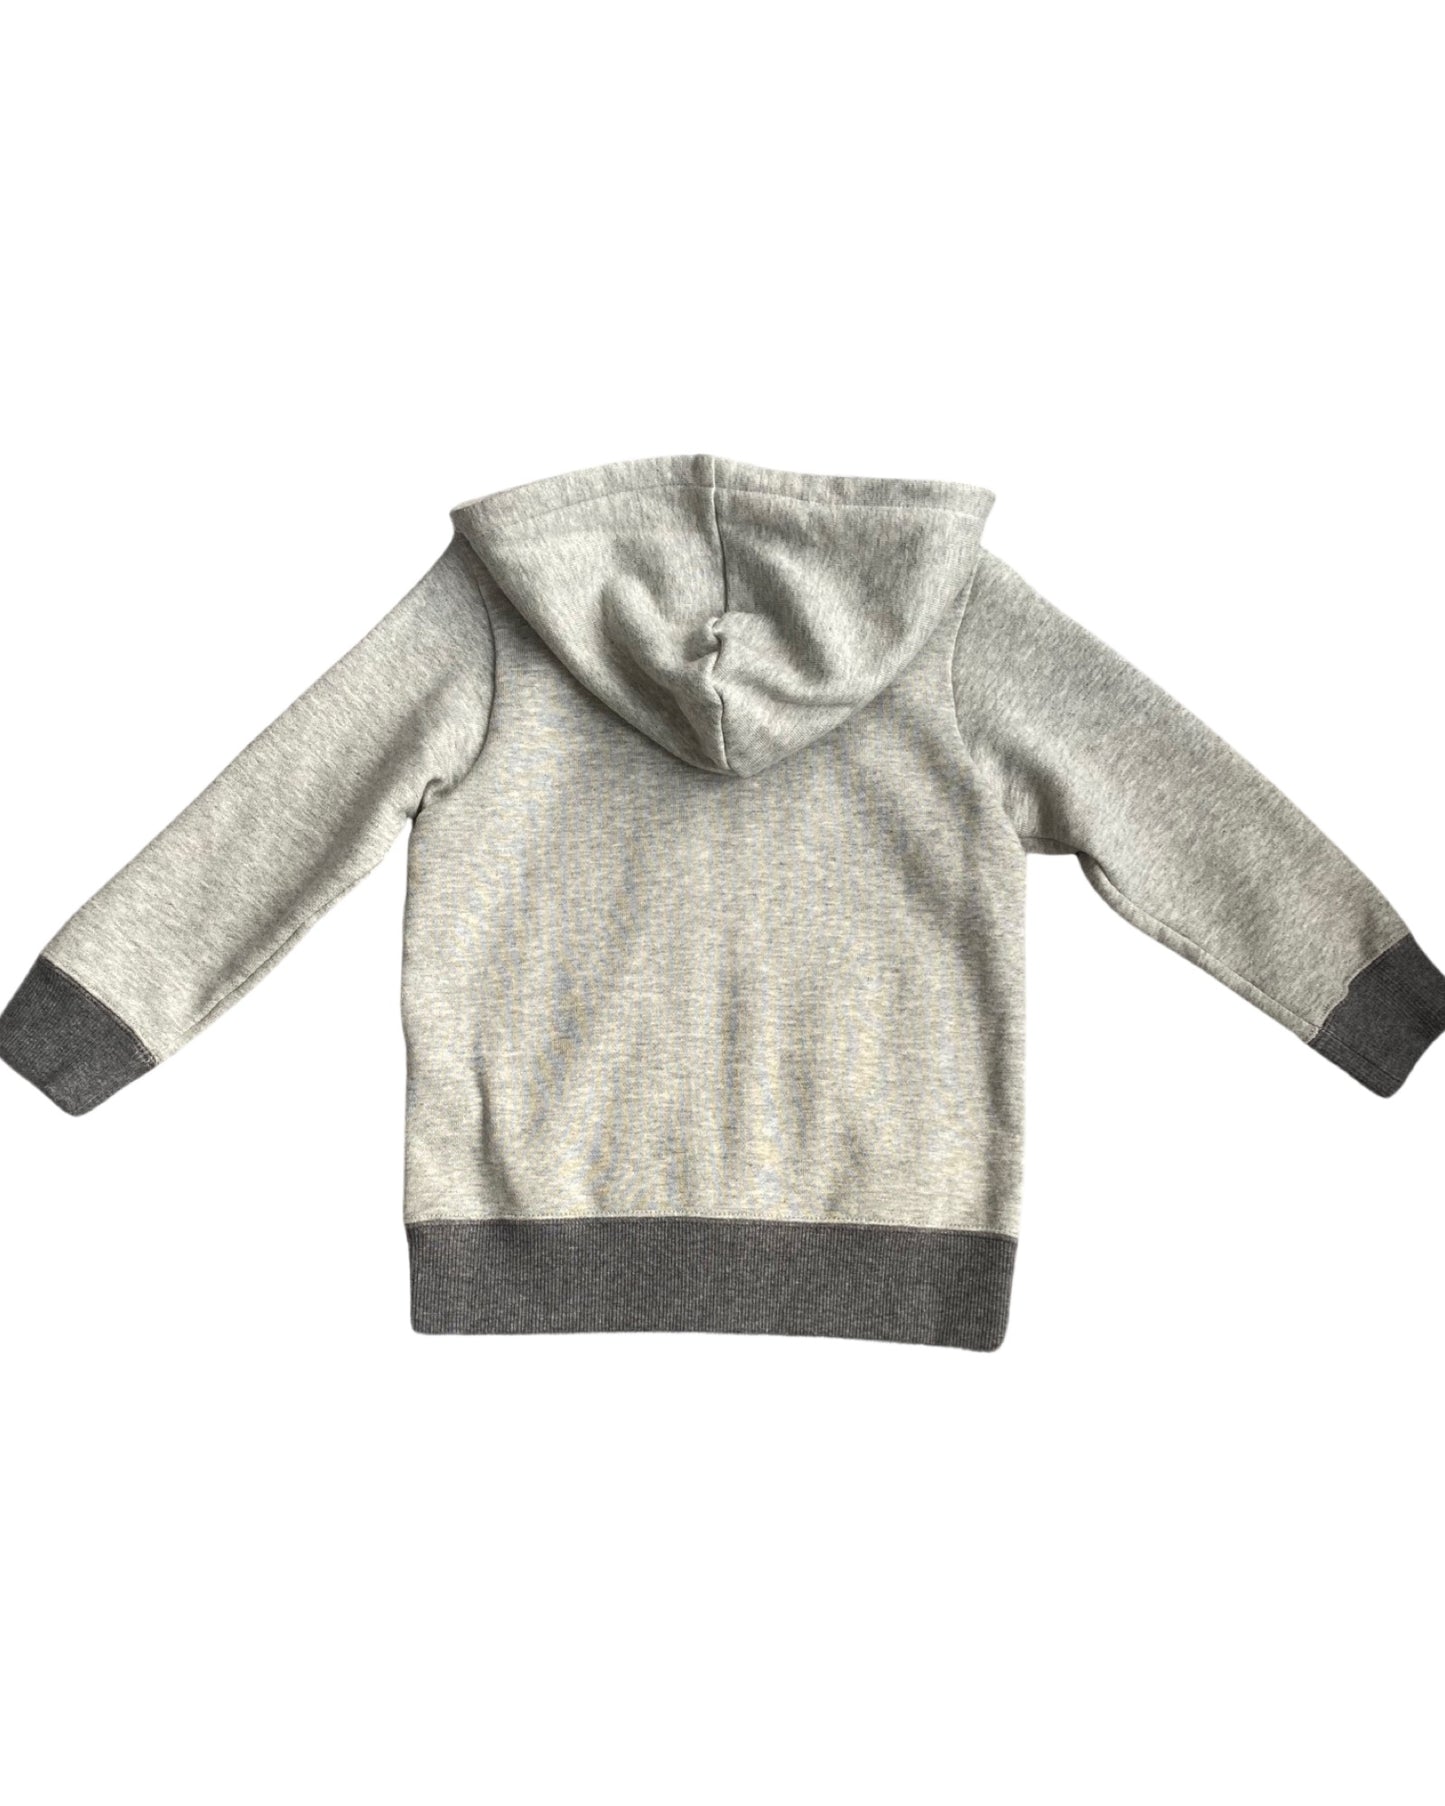 Mikihouse zip up hoodie with detachable hood  (3-4years)